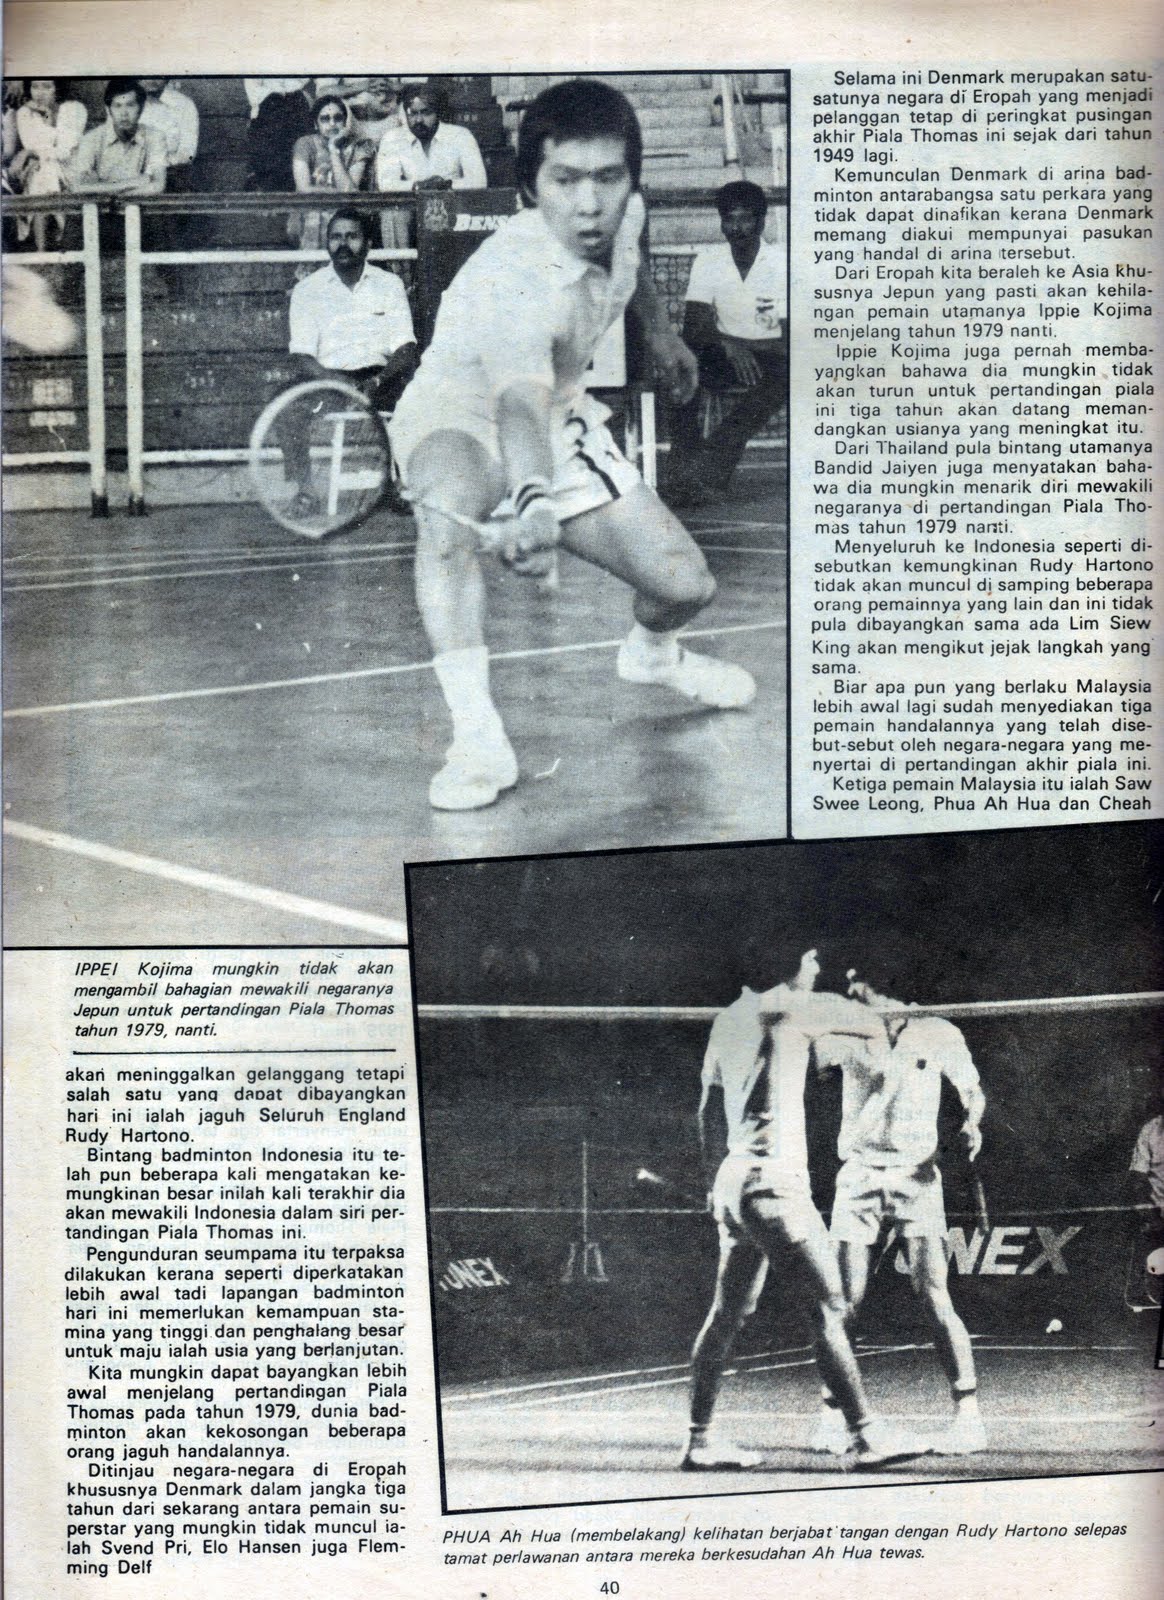 MynahBirds Badminton Archives Blog 1976 Thomas Cup Final